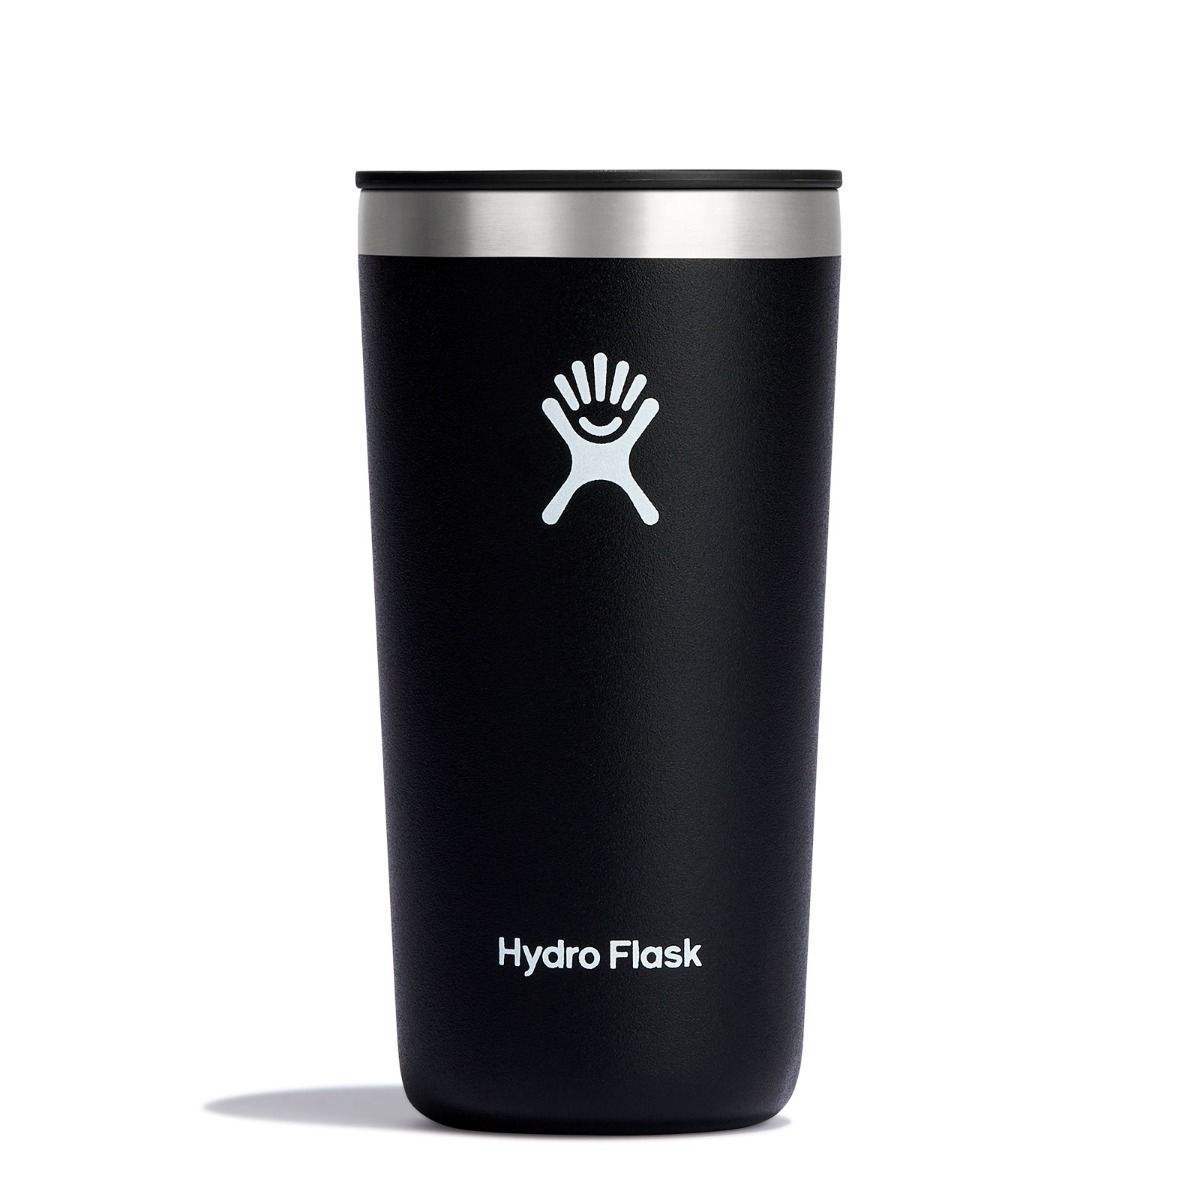 Hydro Flask 12oz Tumbler